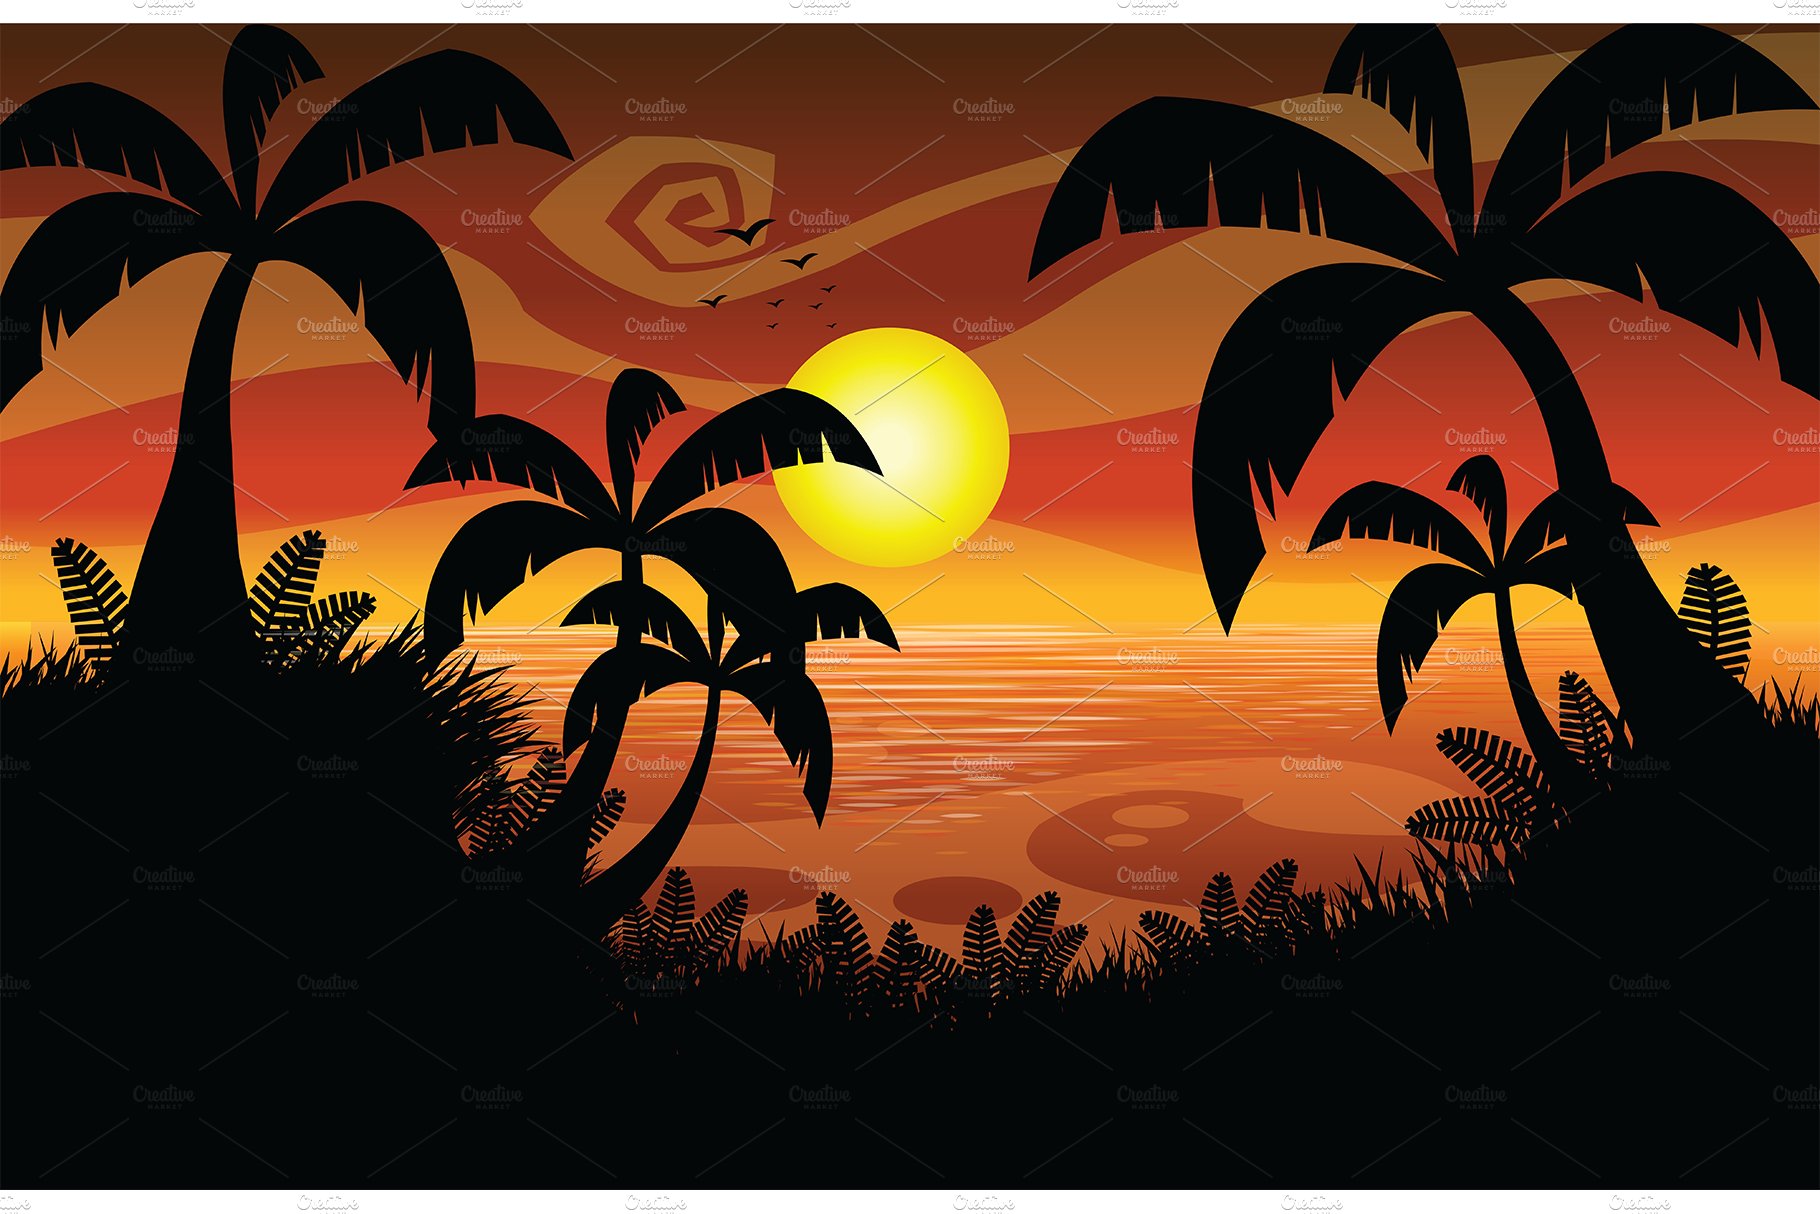 Sunset Cartoon Flat Design cover image.